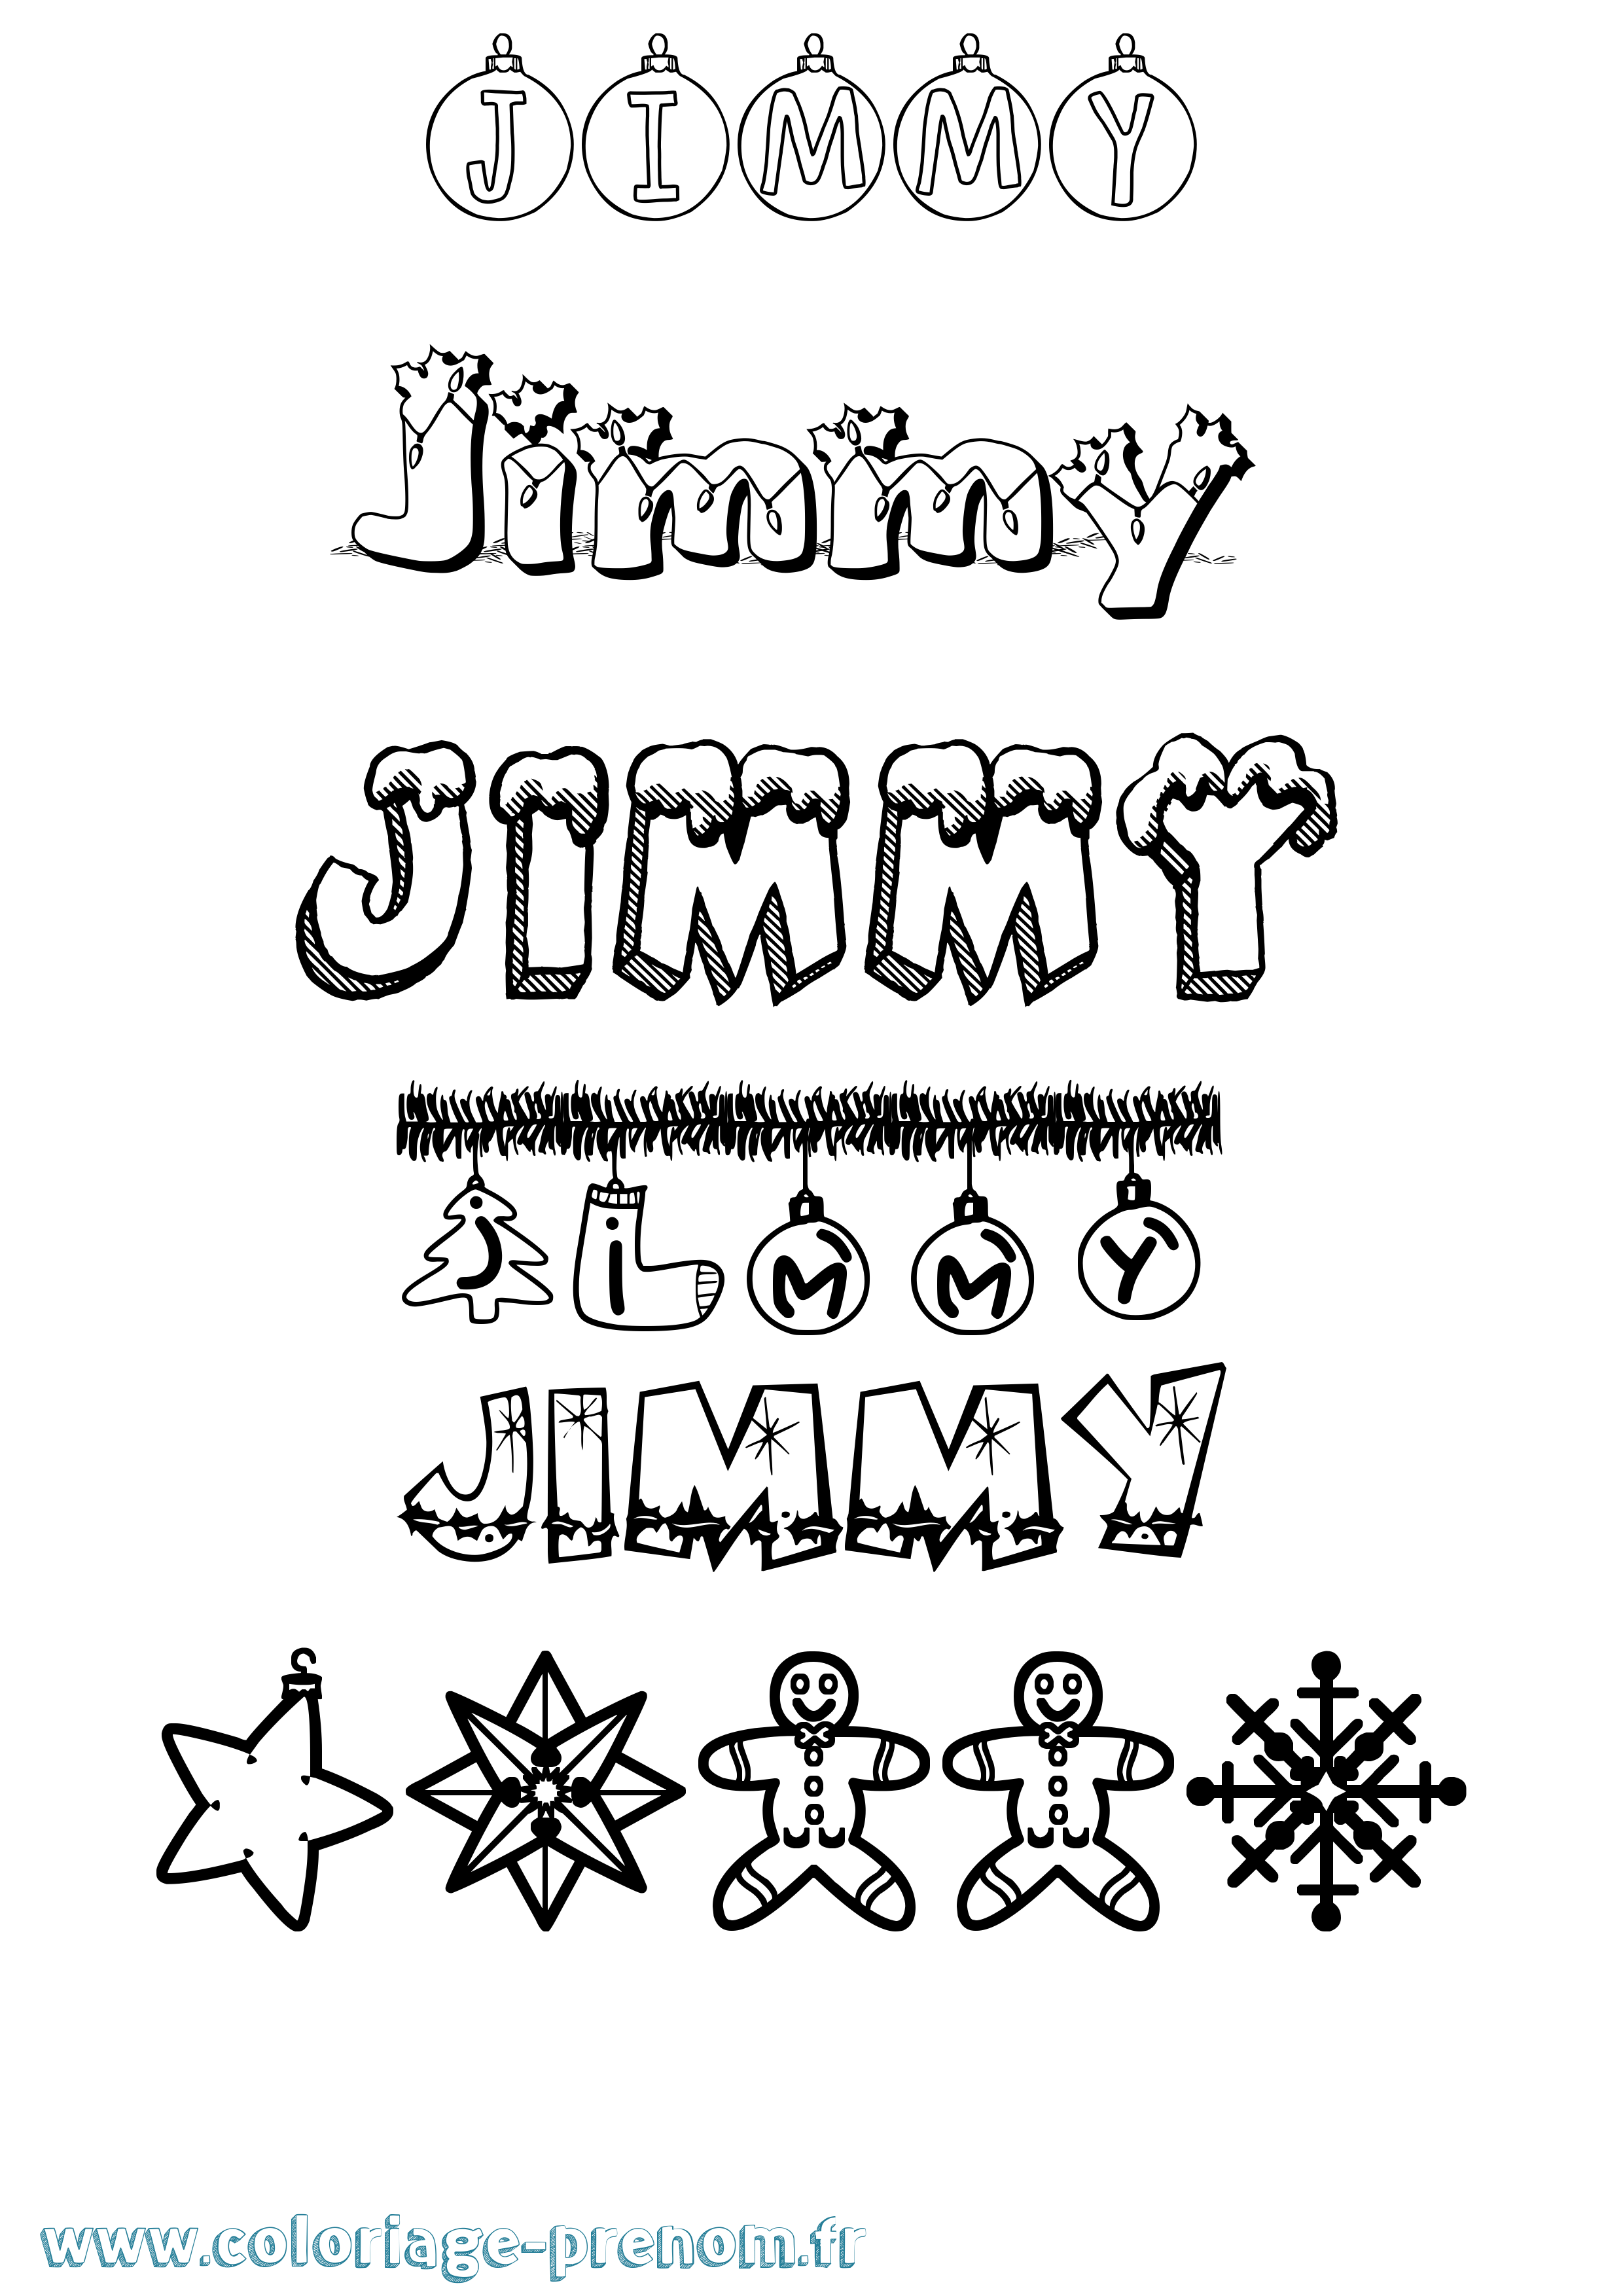 Coloriage prénom Jimmy Noël